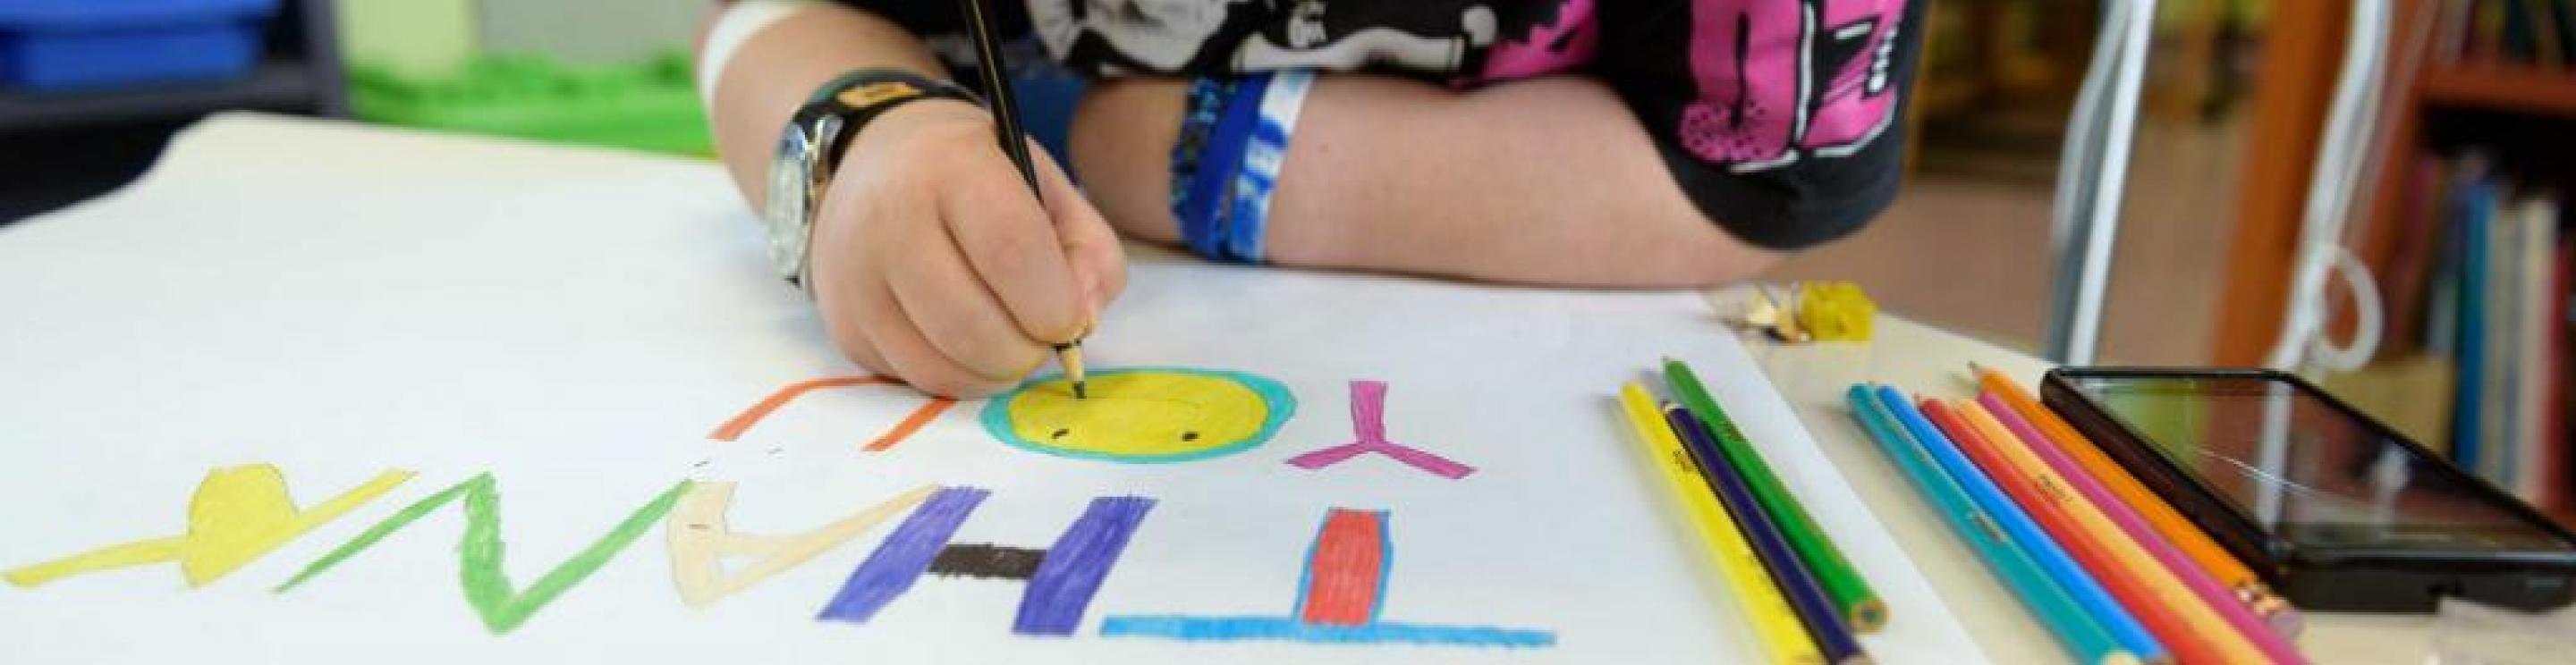 Closeup of a child colouring